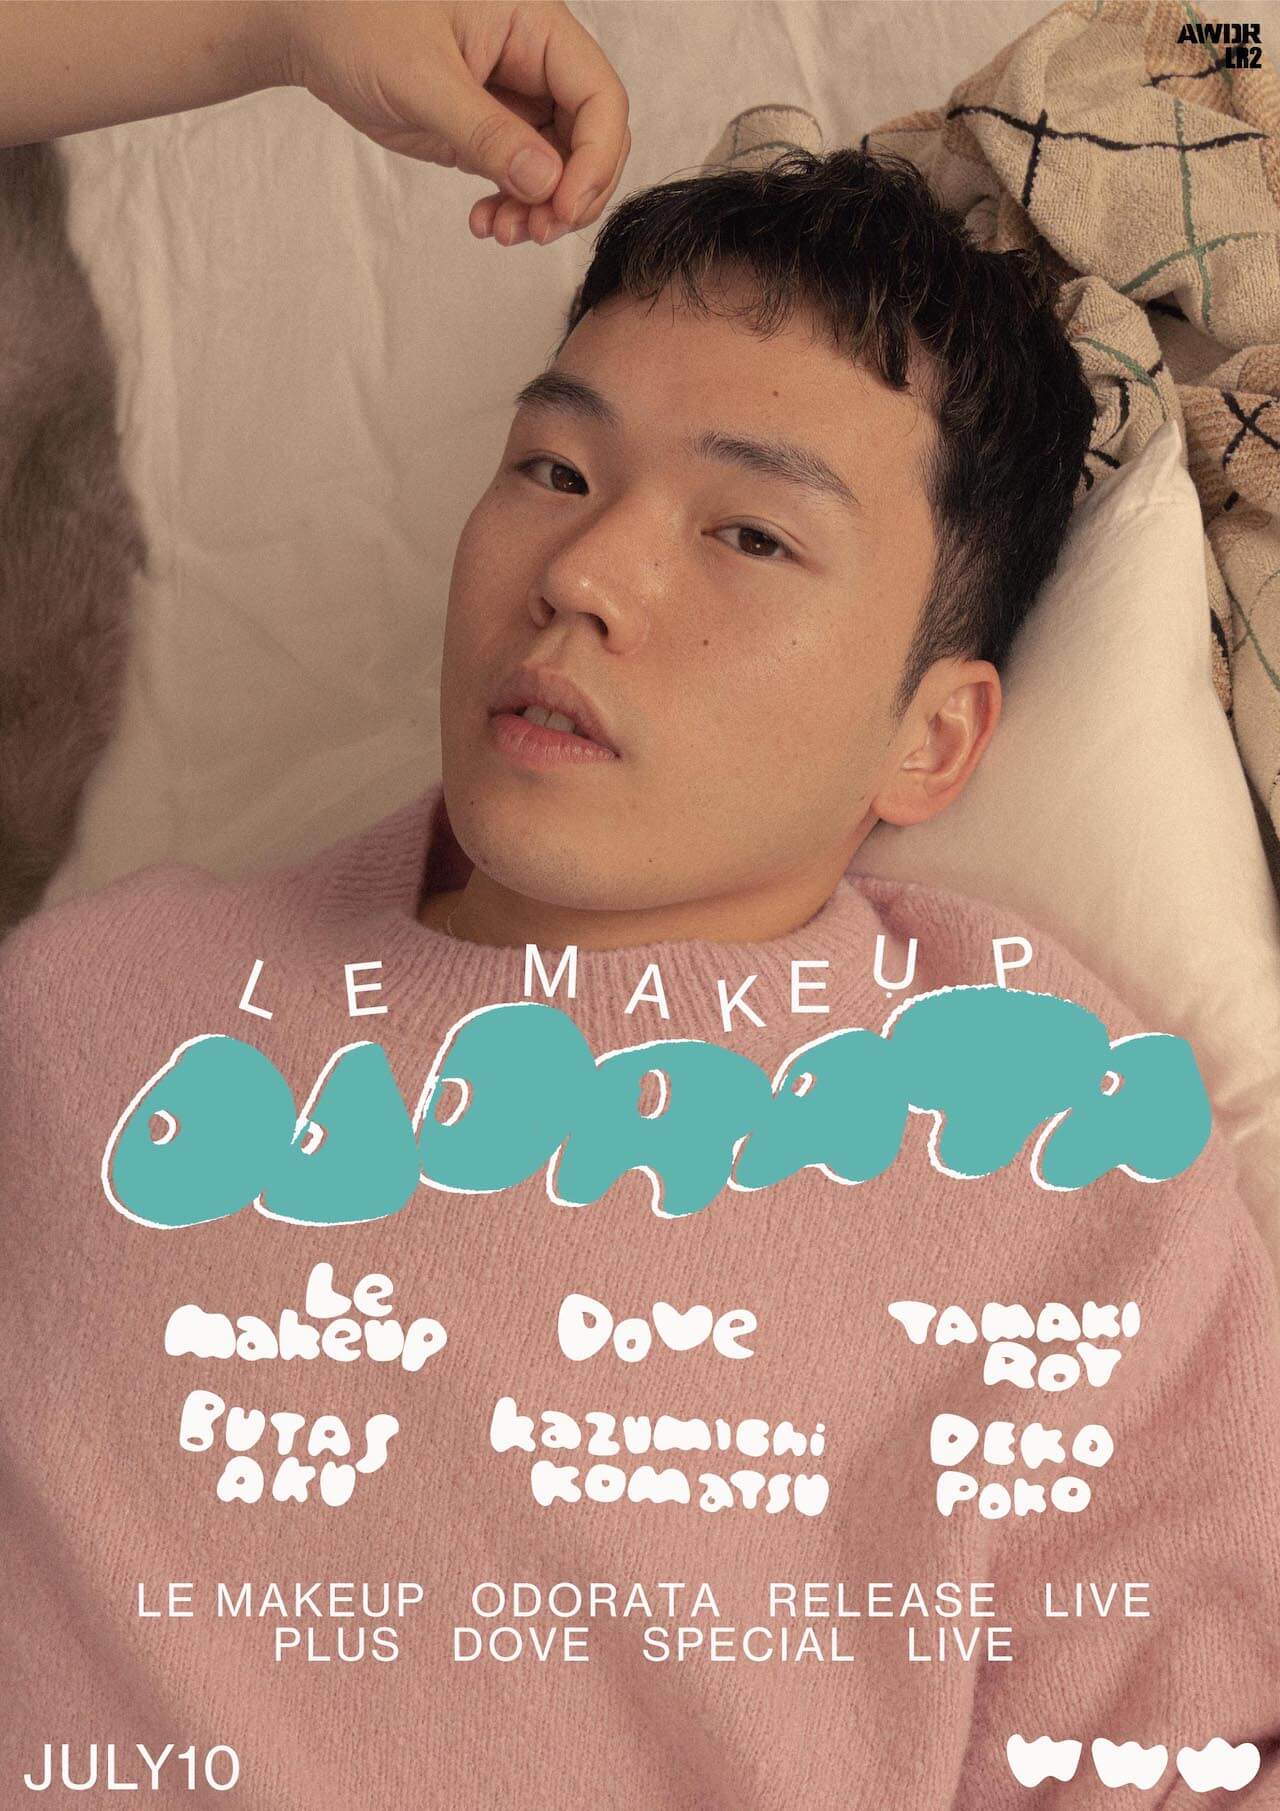 Le Makeup、最新作『Odorata』のリリースパーティーをWWWで開催｜環ROY、butasaku、Kazumichi Komatsuらが出演＆ドイツに拠点を移すDoveのスペシャルライブも music230609-le-makeup-dove